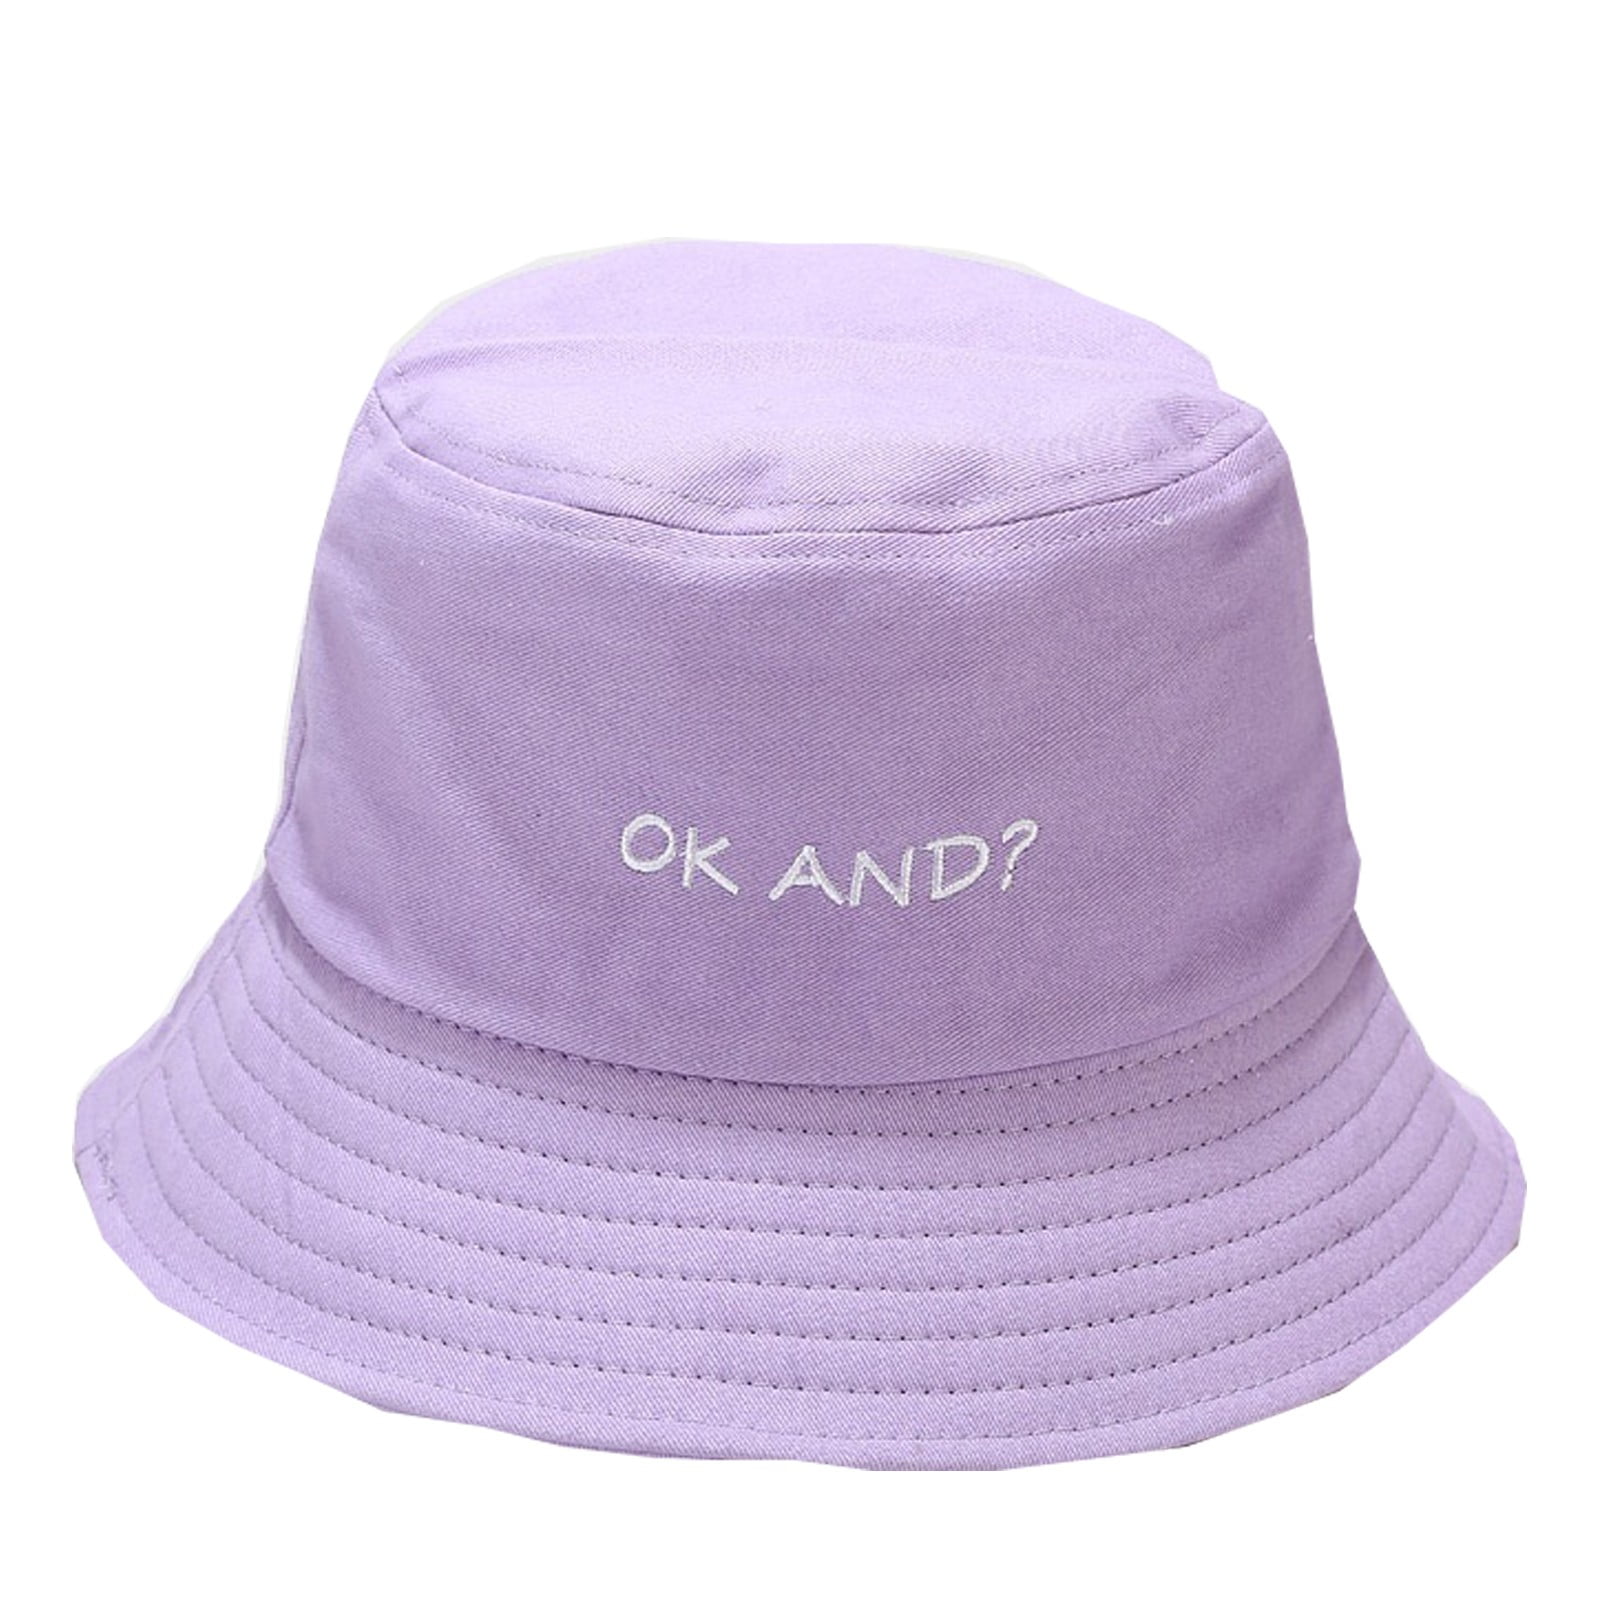 ViYW Bucket Hat for Women,Fashion Summer Fisherman Hat Packable Casual Travel Beach Sun Hats